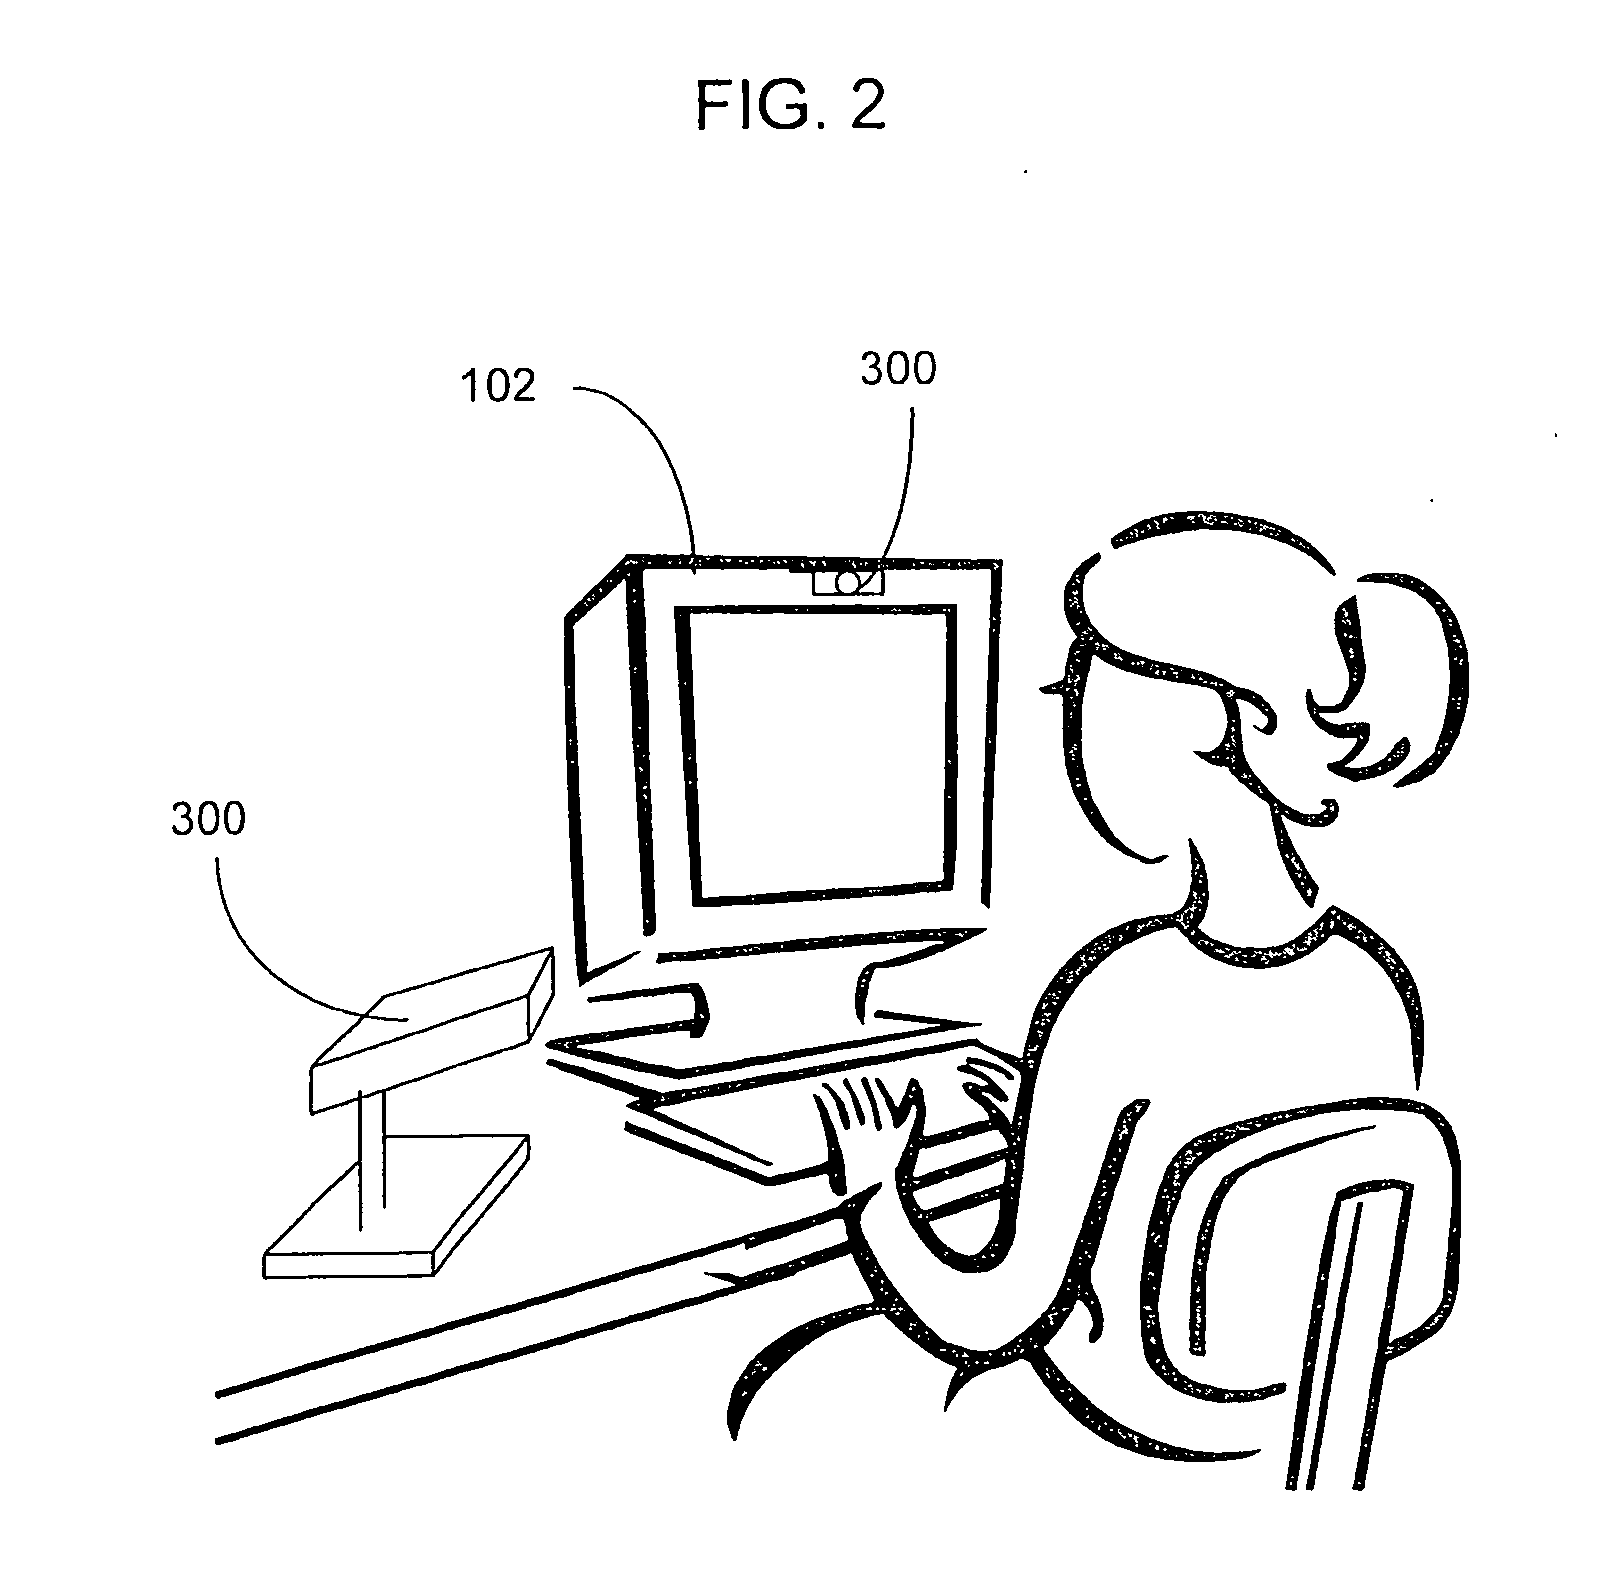 Visually directed human-computer interaction for medical applications